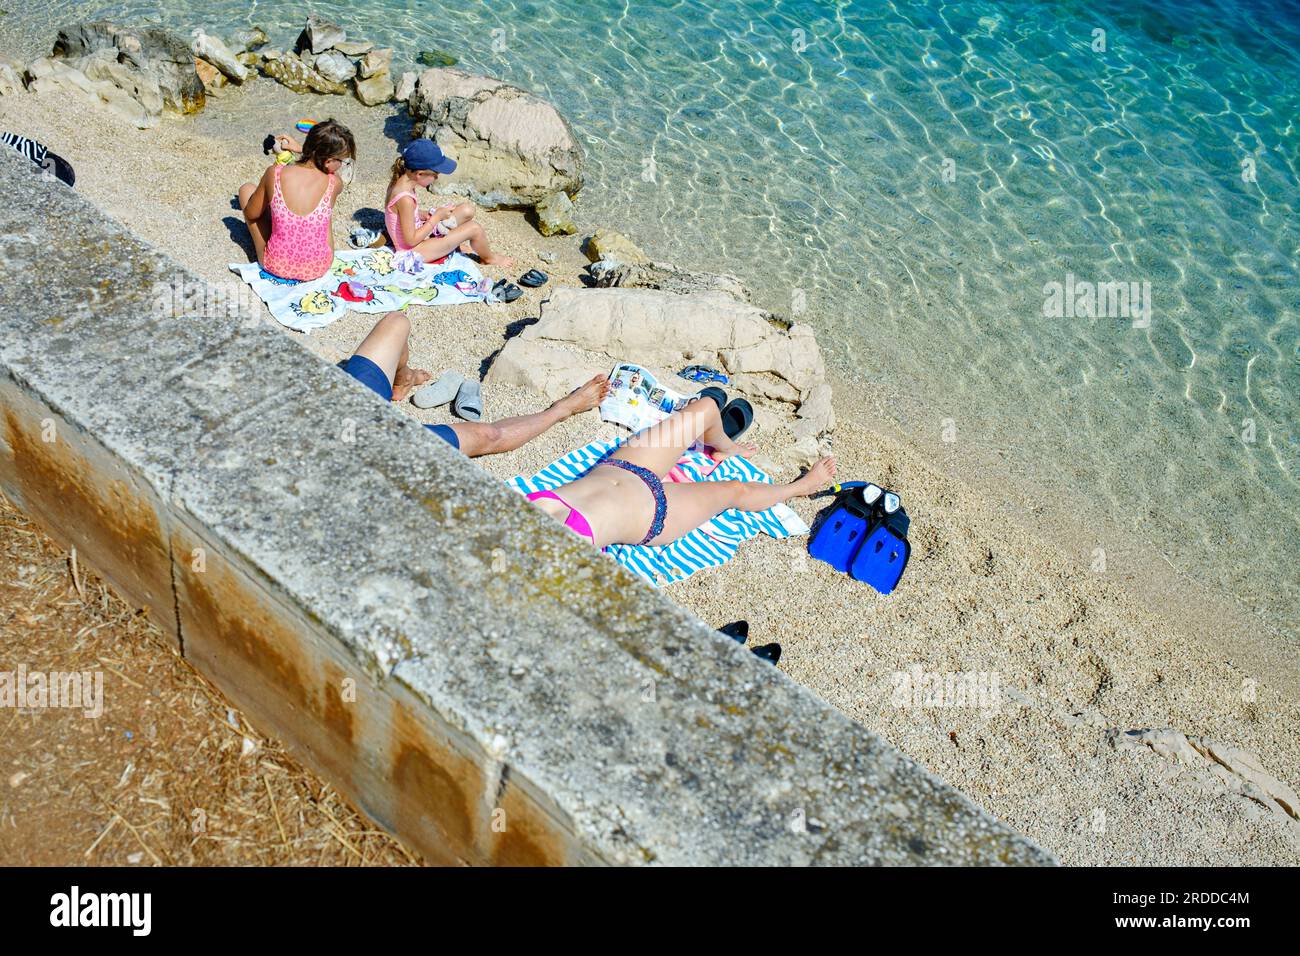 Wien Kroatien Sommer sonne Strand Meer Straßen wien Schwarts und weiß Fotografie art Stock Photo